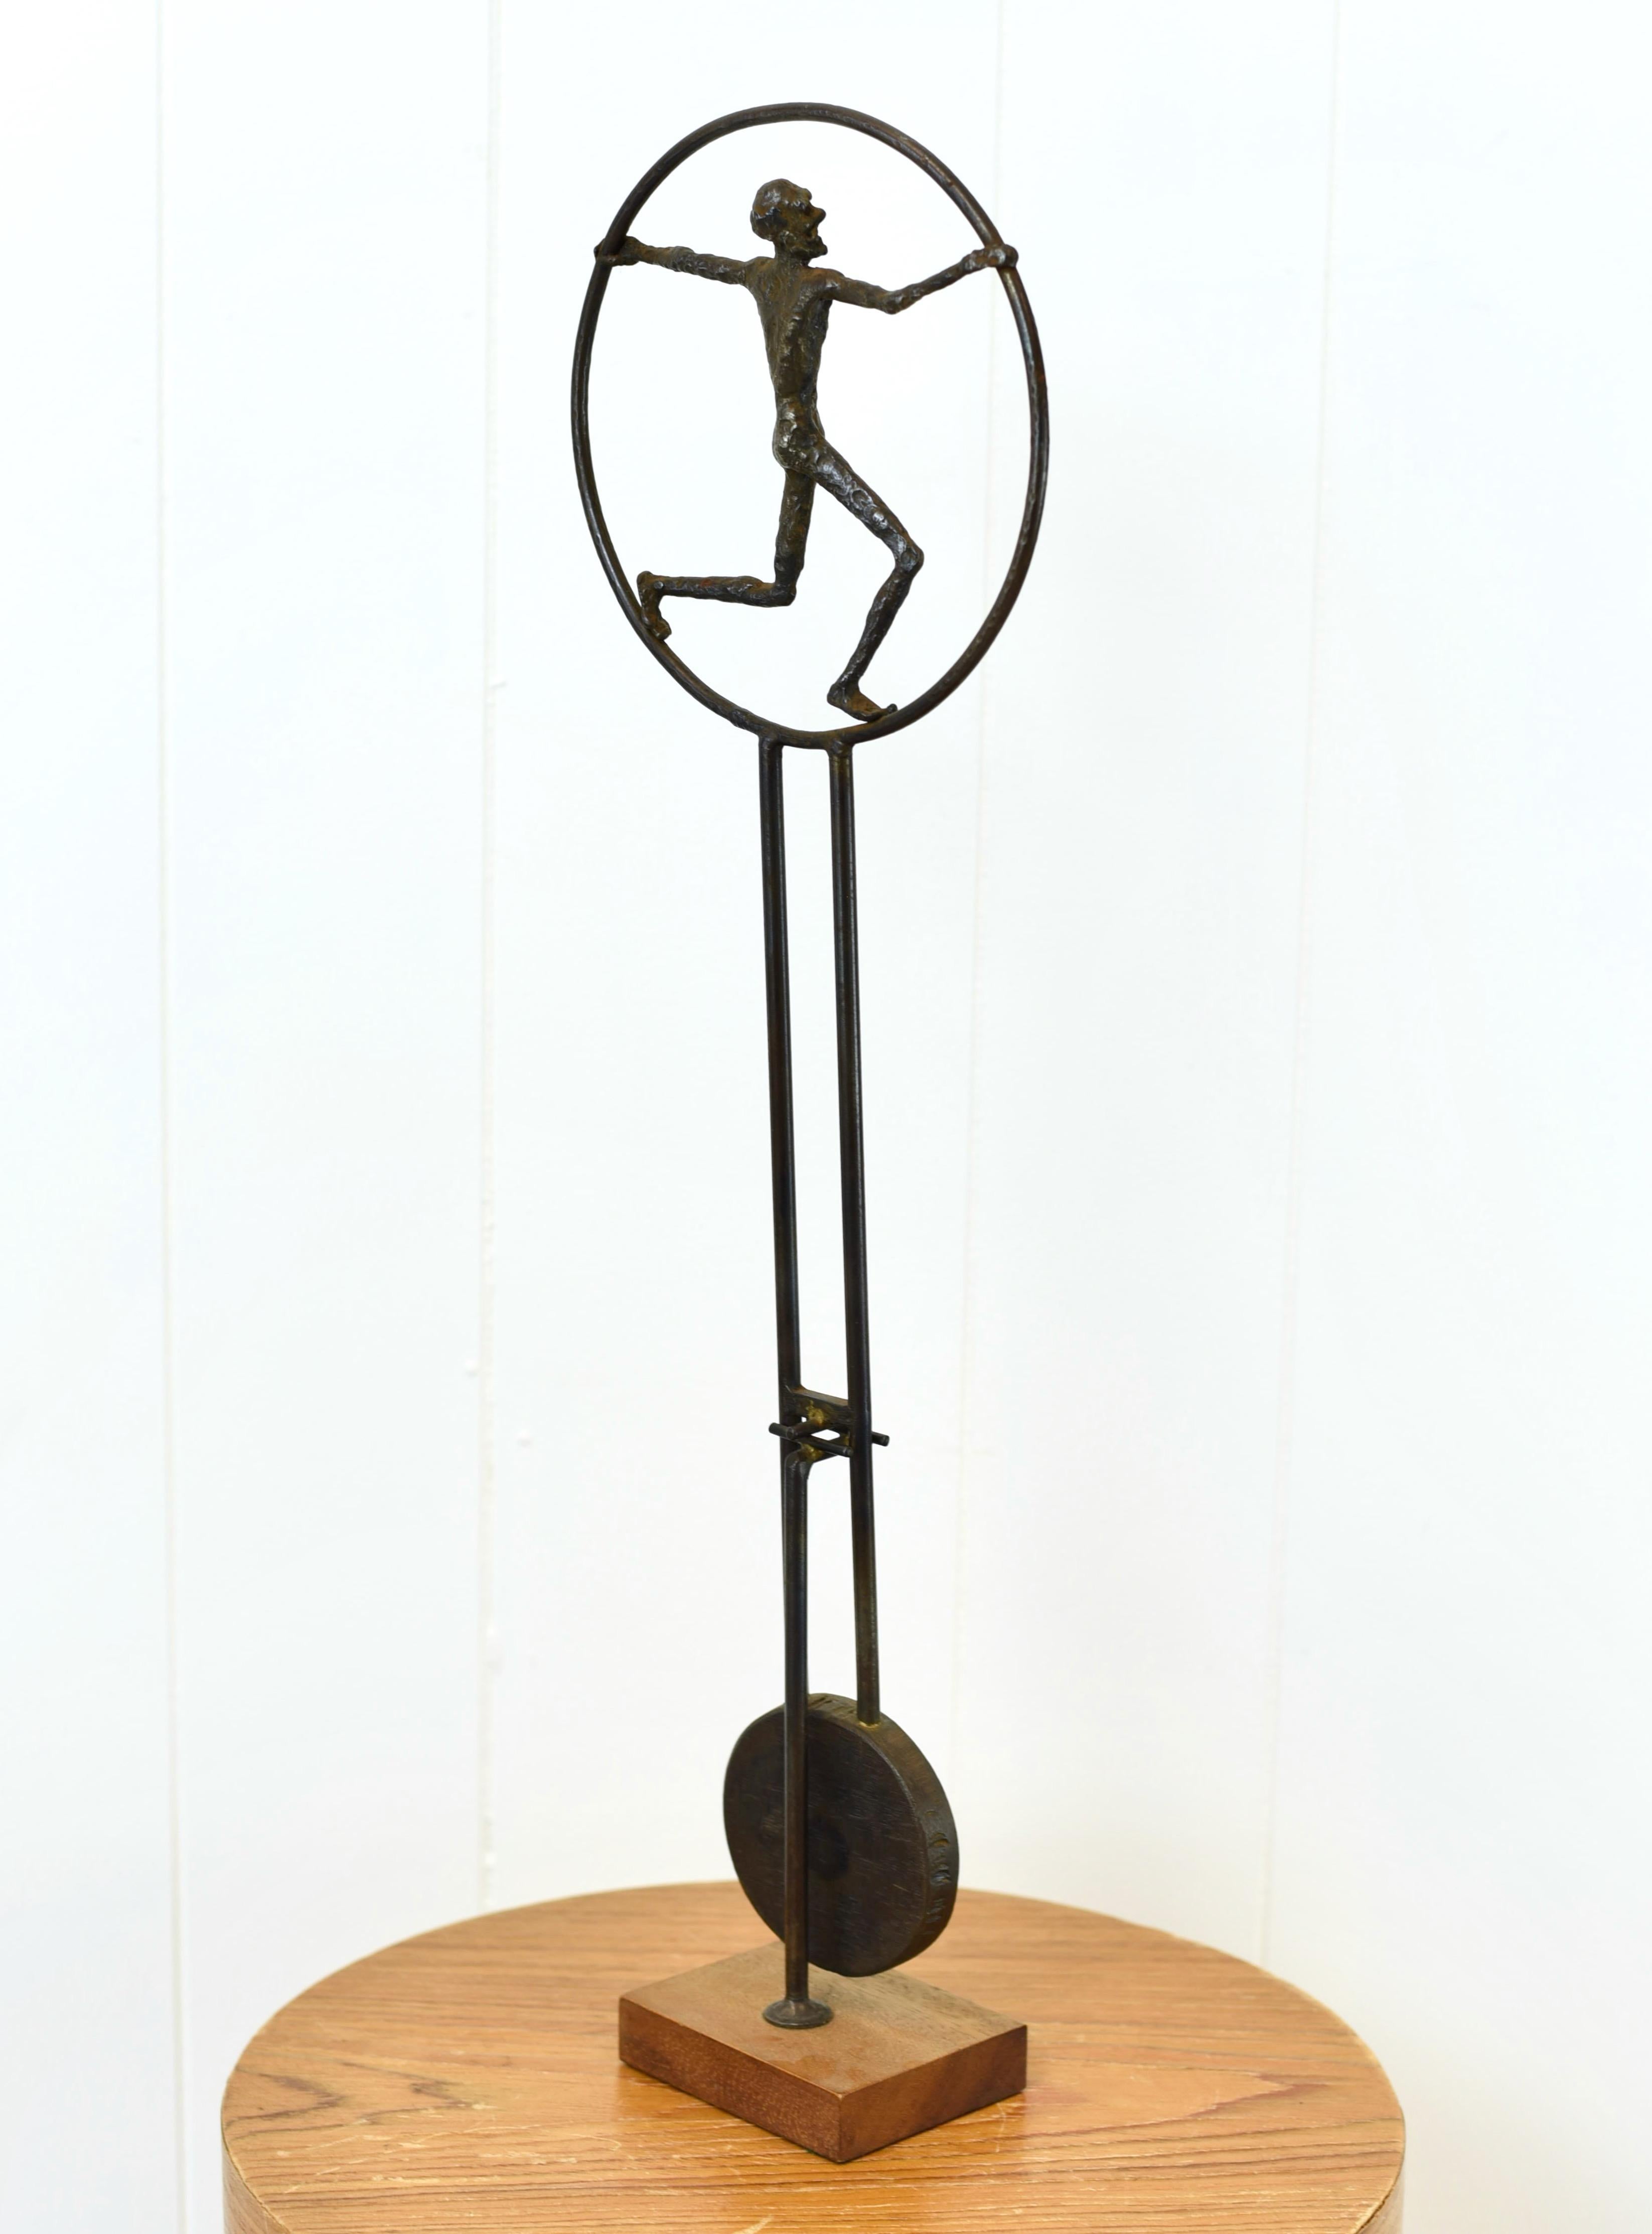 Brutalist Abstract Welded Steel Pendulum Mid Century Modern Kinetic Sculpture In Good Condition For Sale In Sarasota, FL